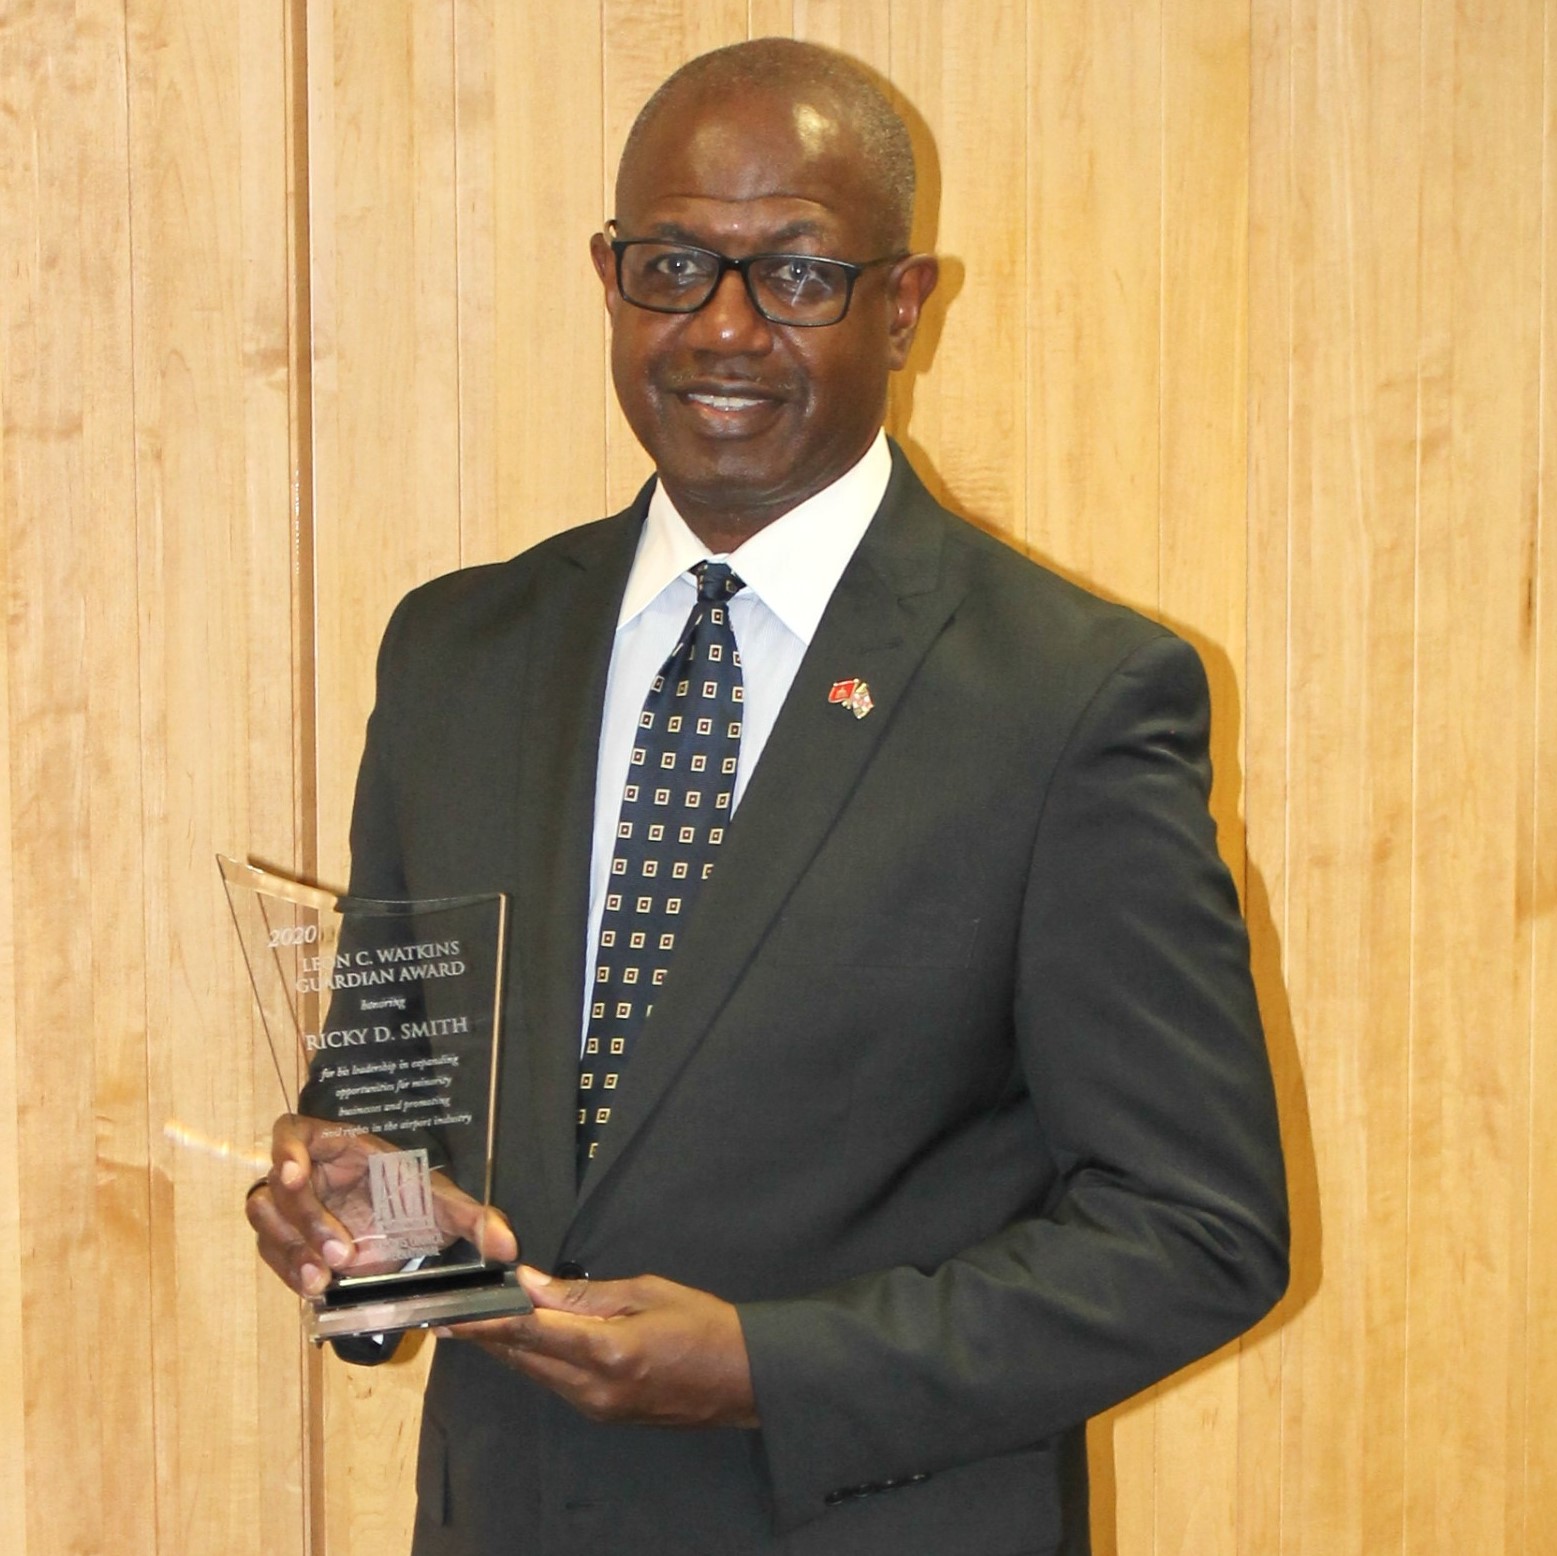 Photograph of Ricky Smith holding ACI-NA Leon C. Watkins Guardian Award trophy